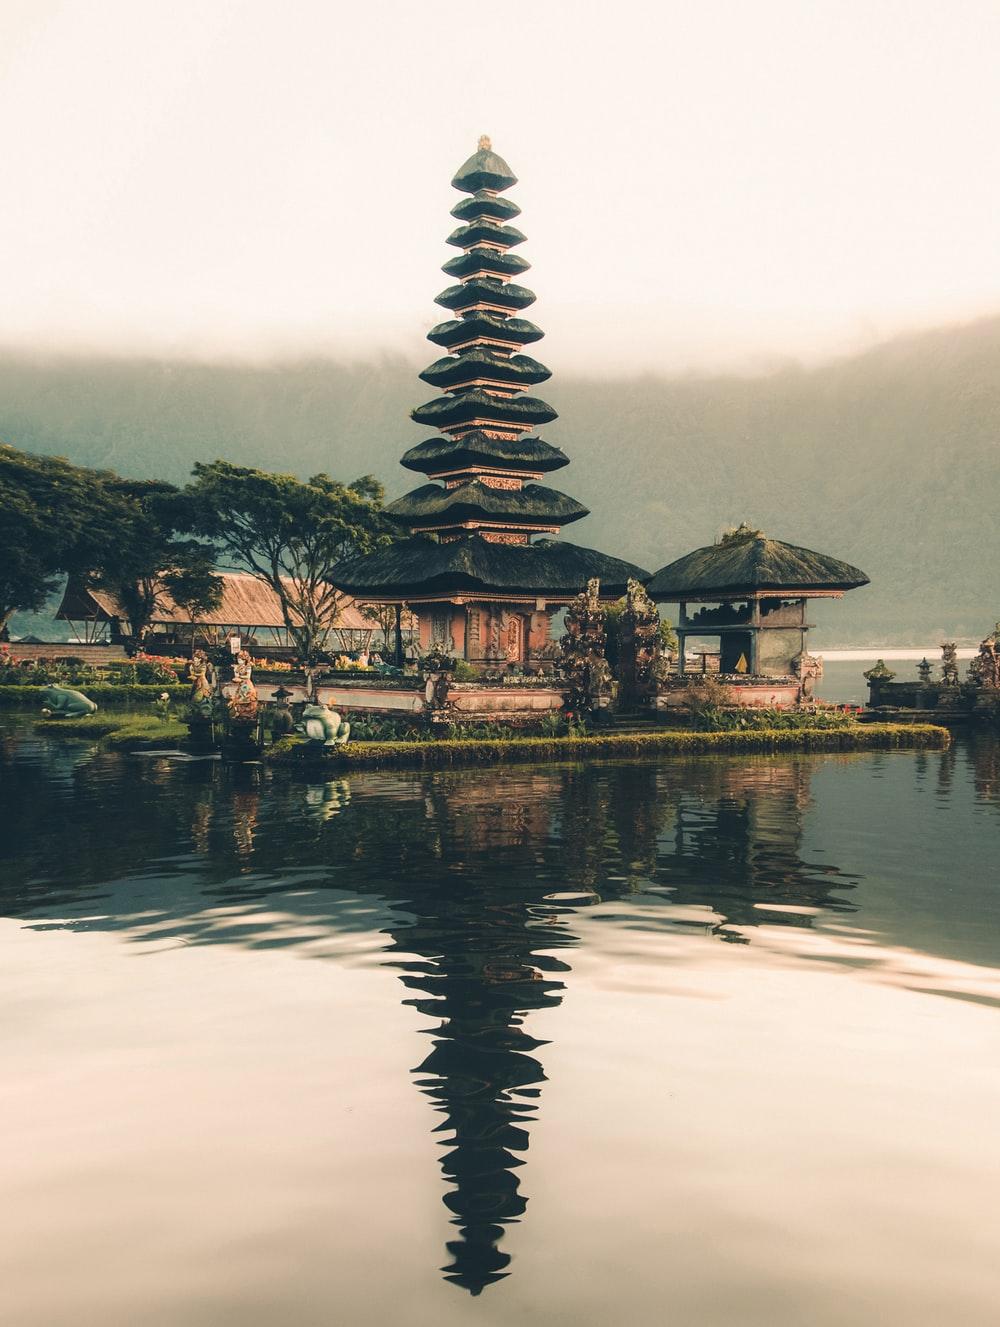 Beautiful Bali Picture. Download Free Image